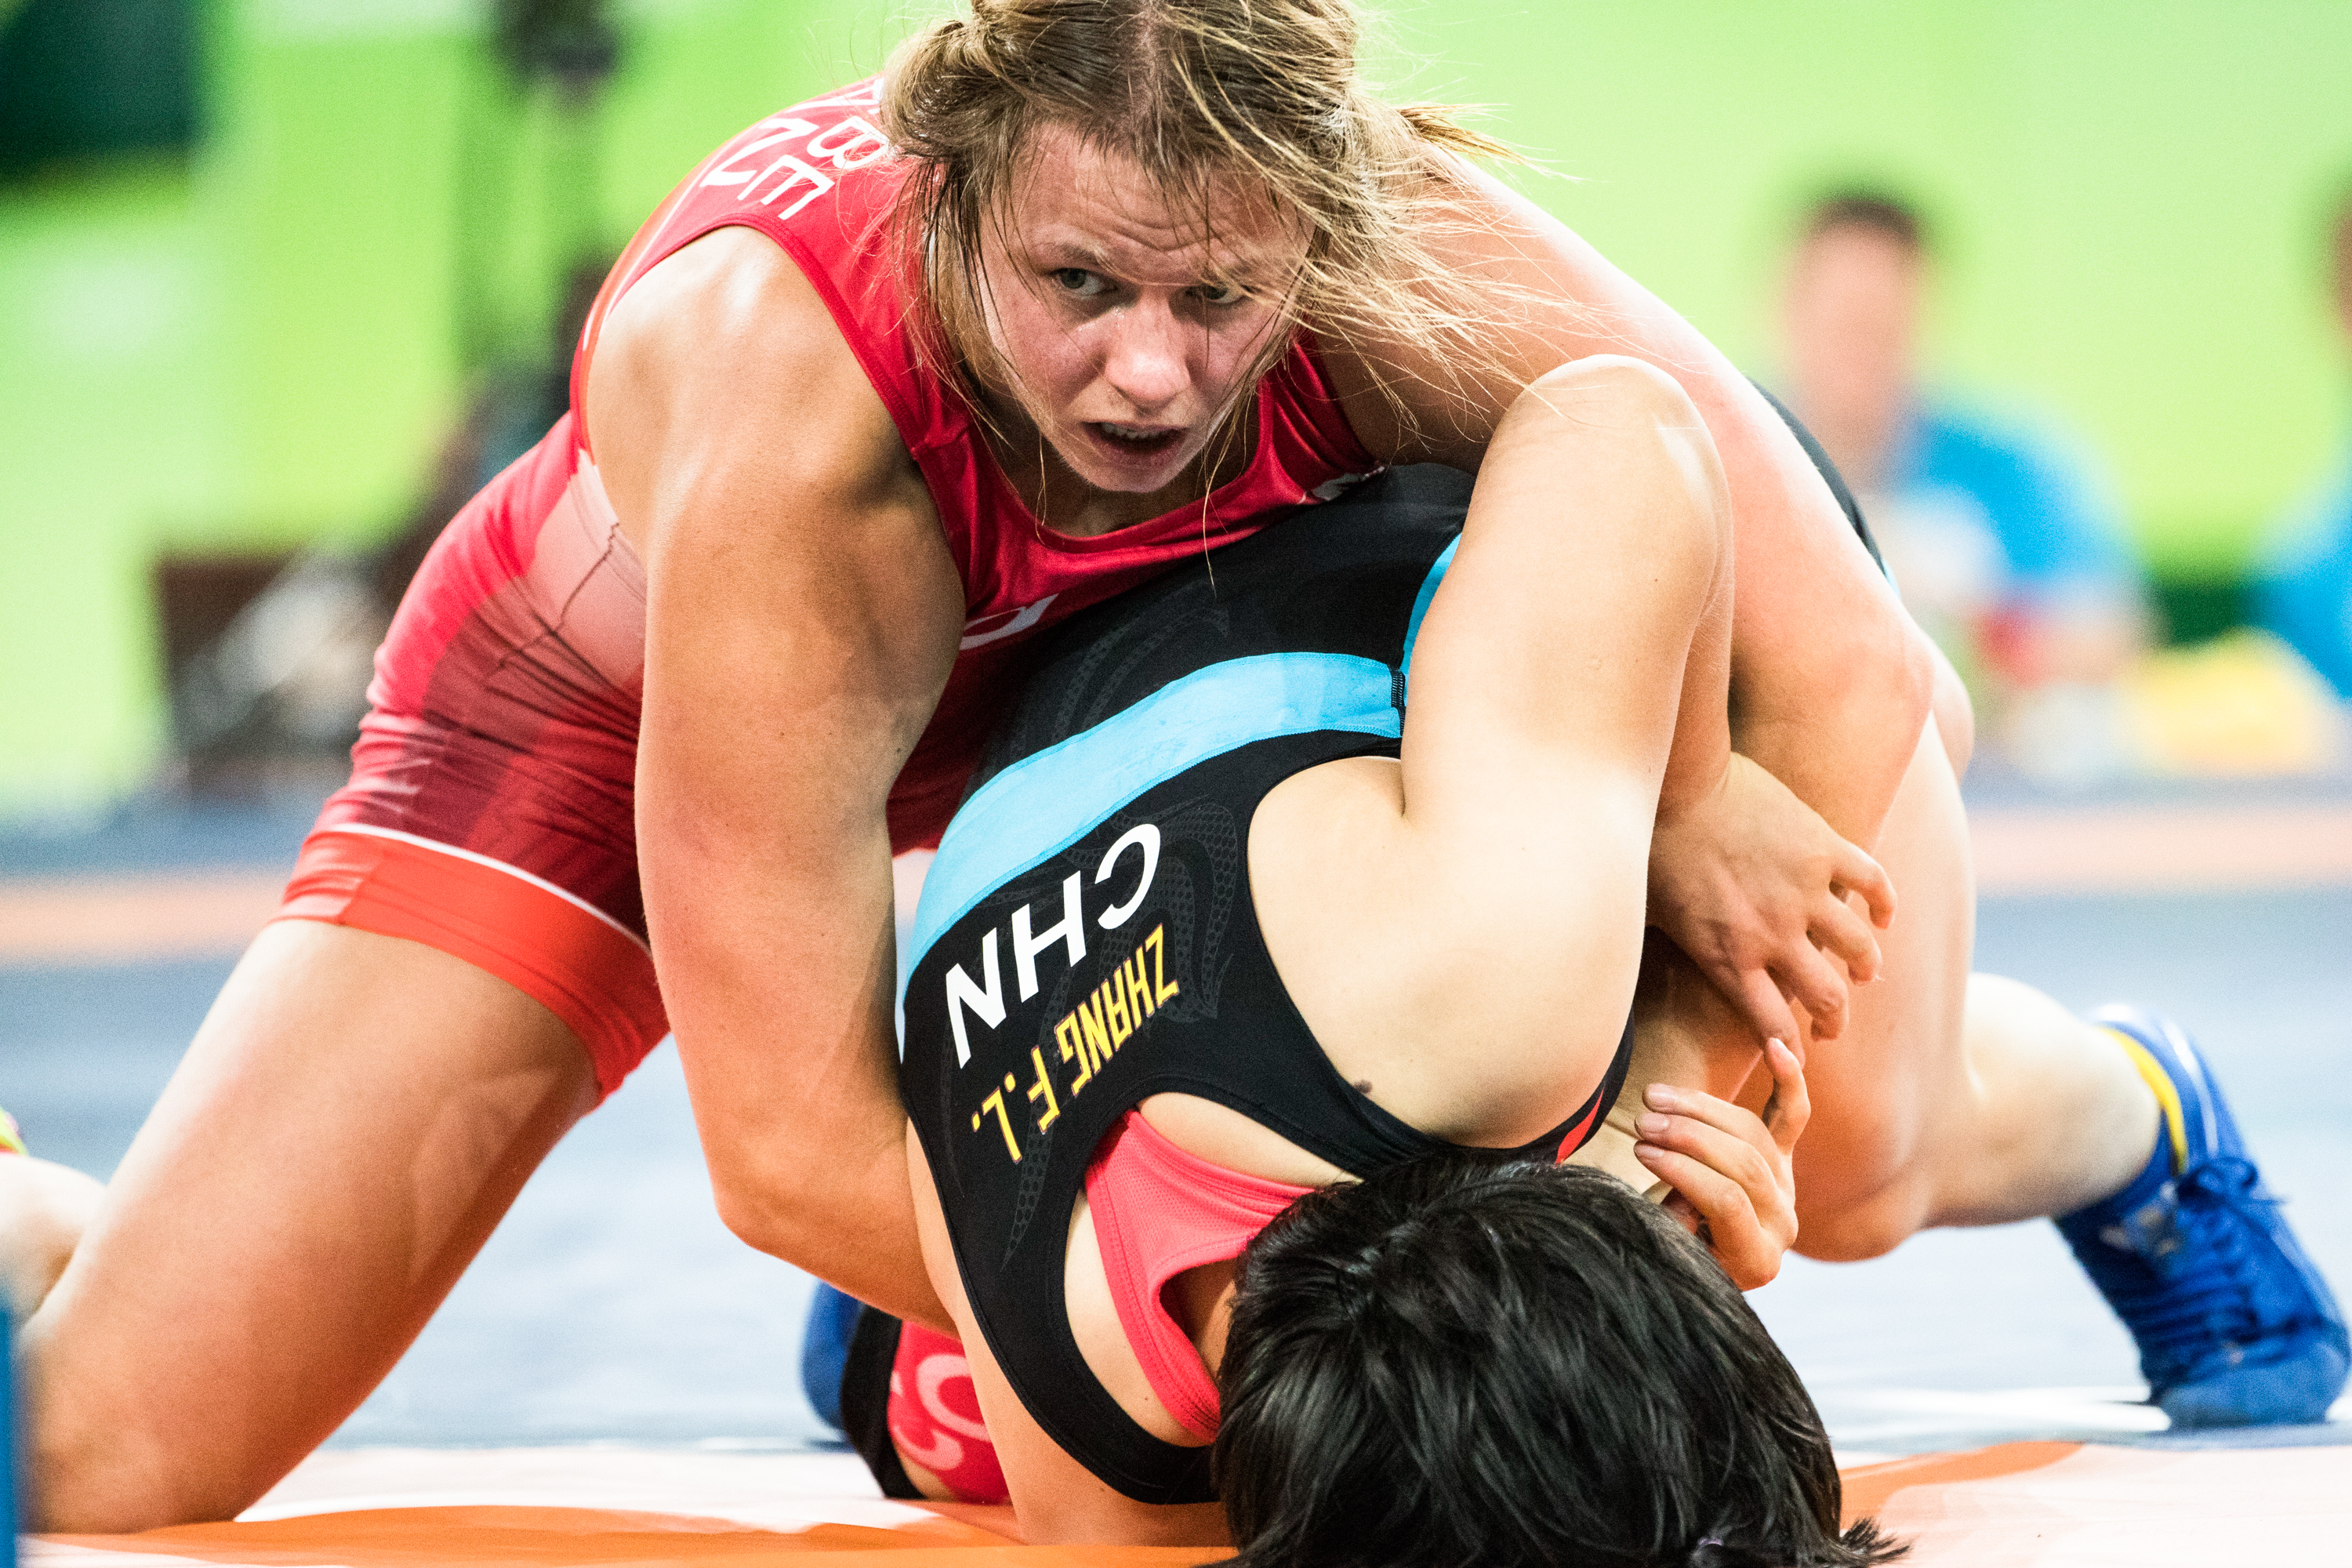 Team Canada’s Erica Elizabeth Wiebe battles in 63 kg women's wrestling during the quarter finals match at Carioca Stadium, Rio de Janeiro, Brazil, Thursday August 18, 2016. COC Photo/David Jackson